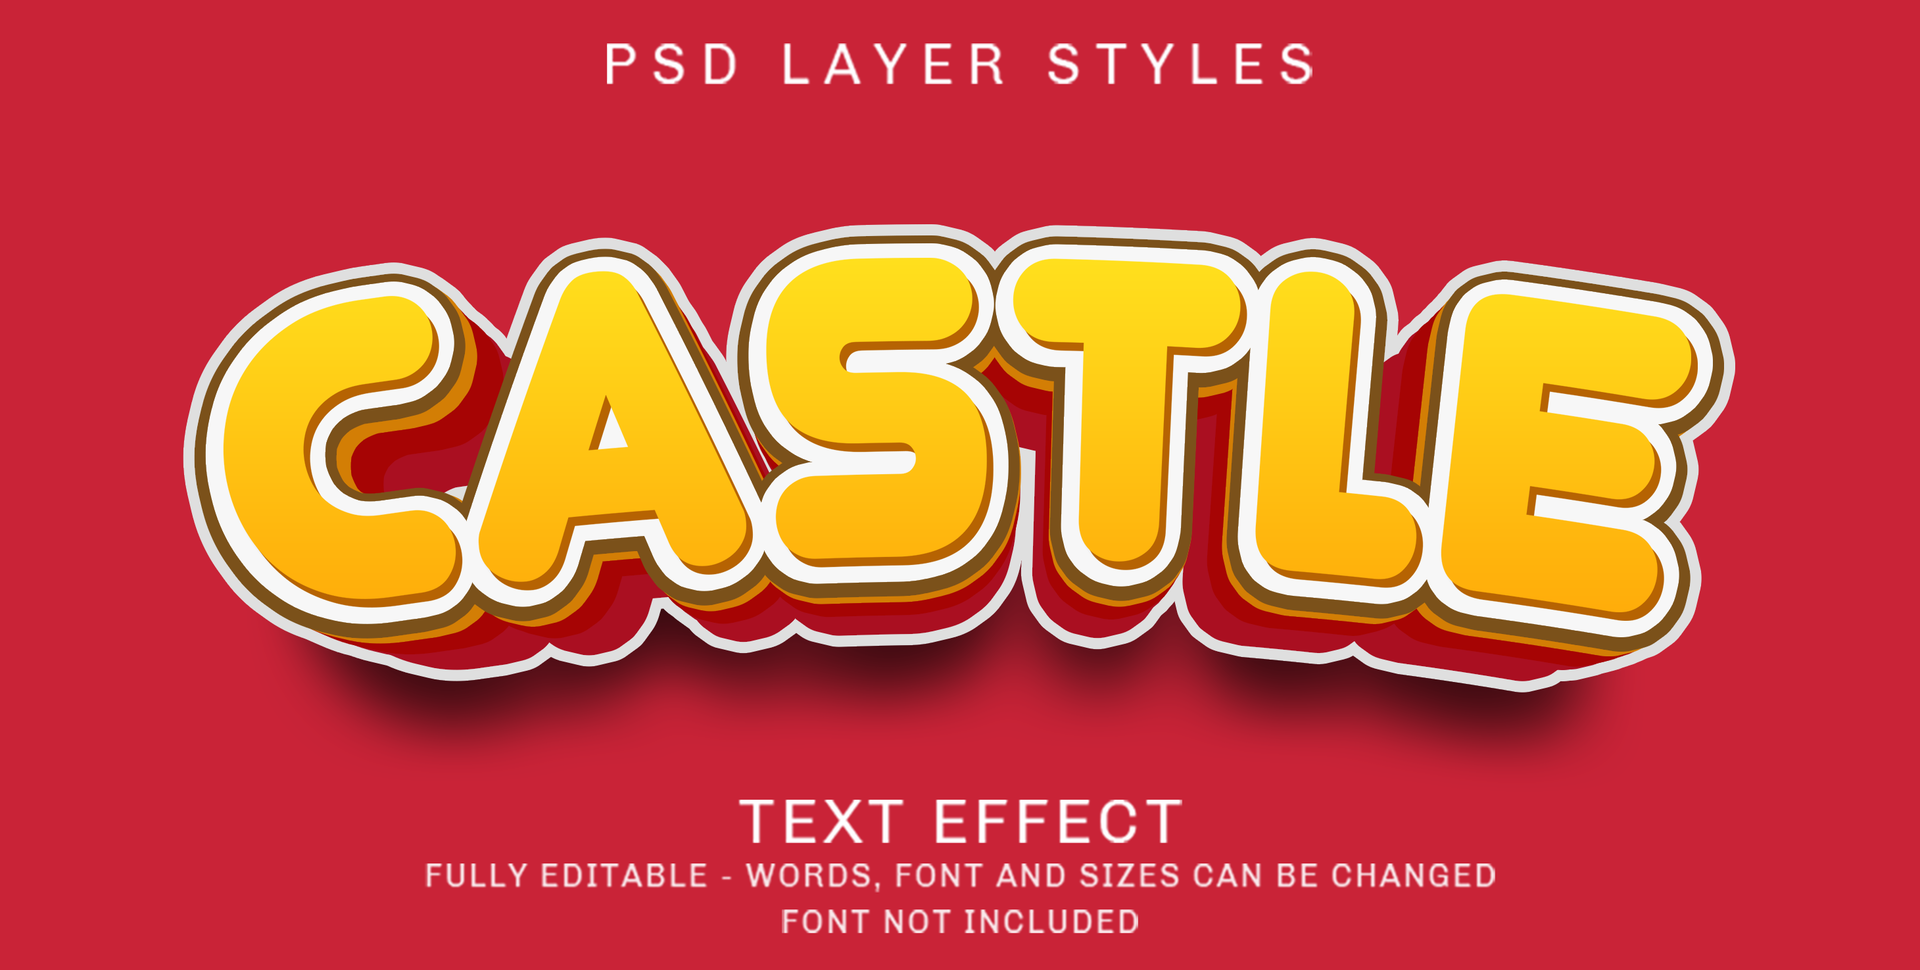 3d castle - editable text style effect psd